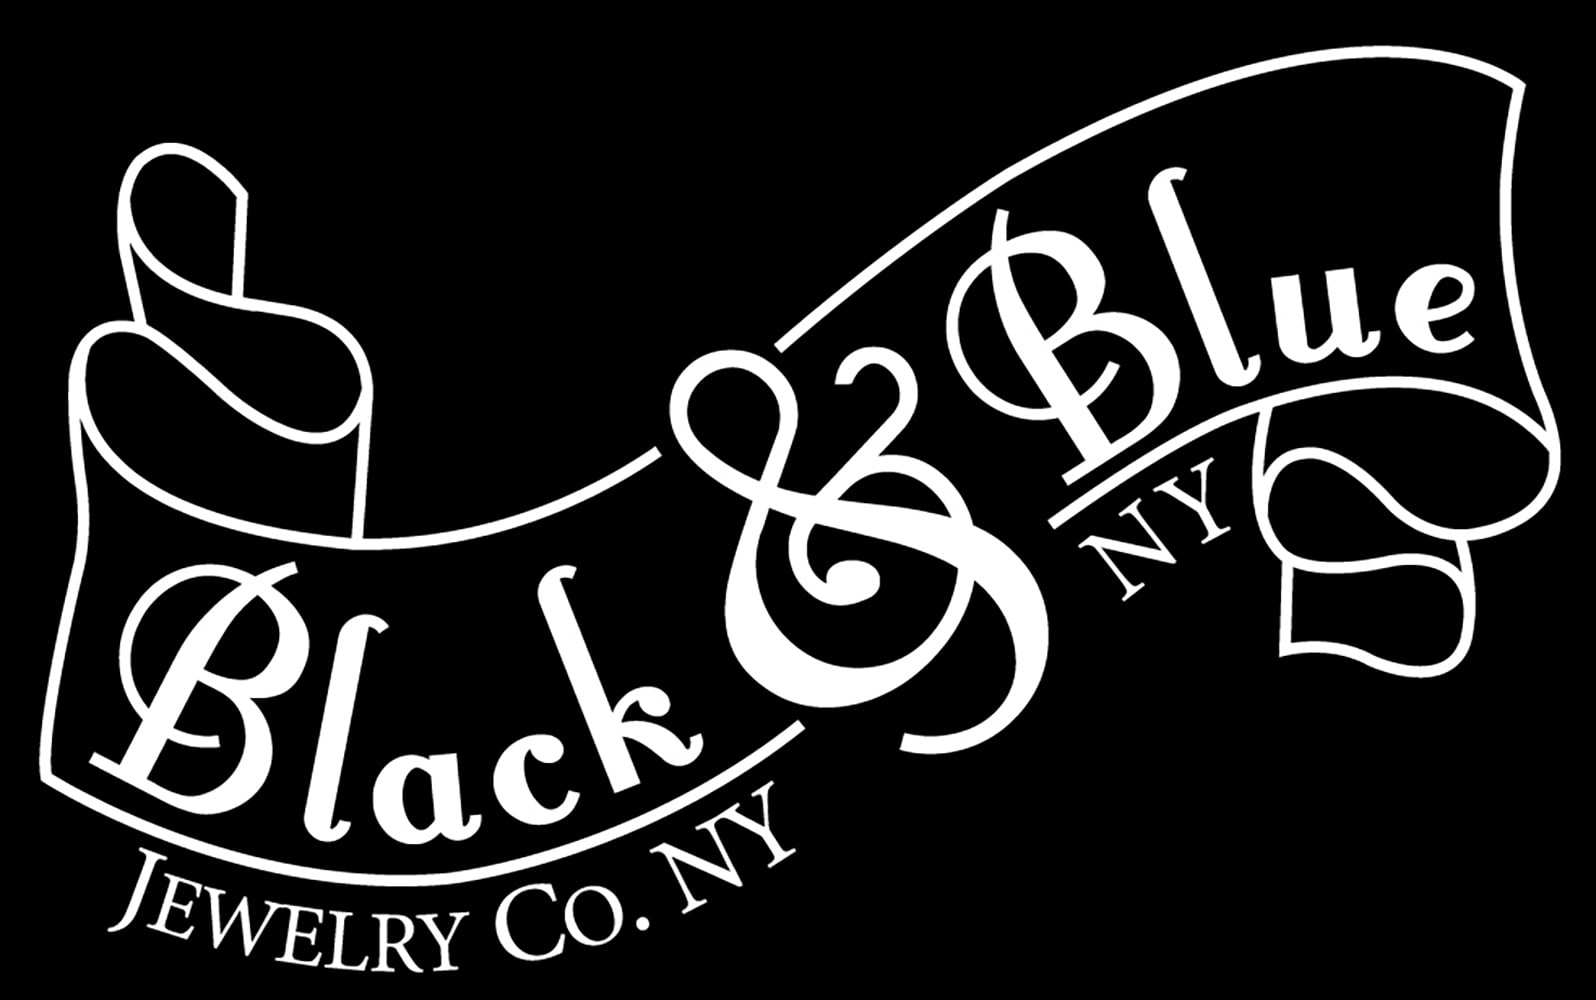 Black & Blue Jewelry logo